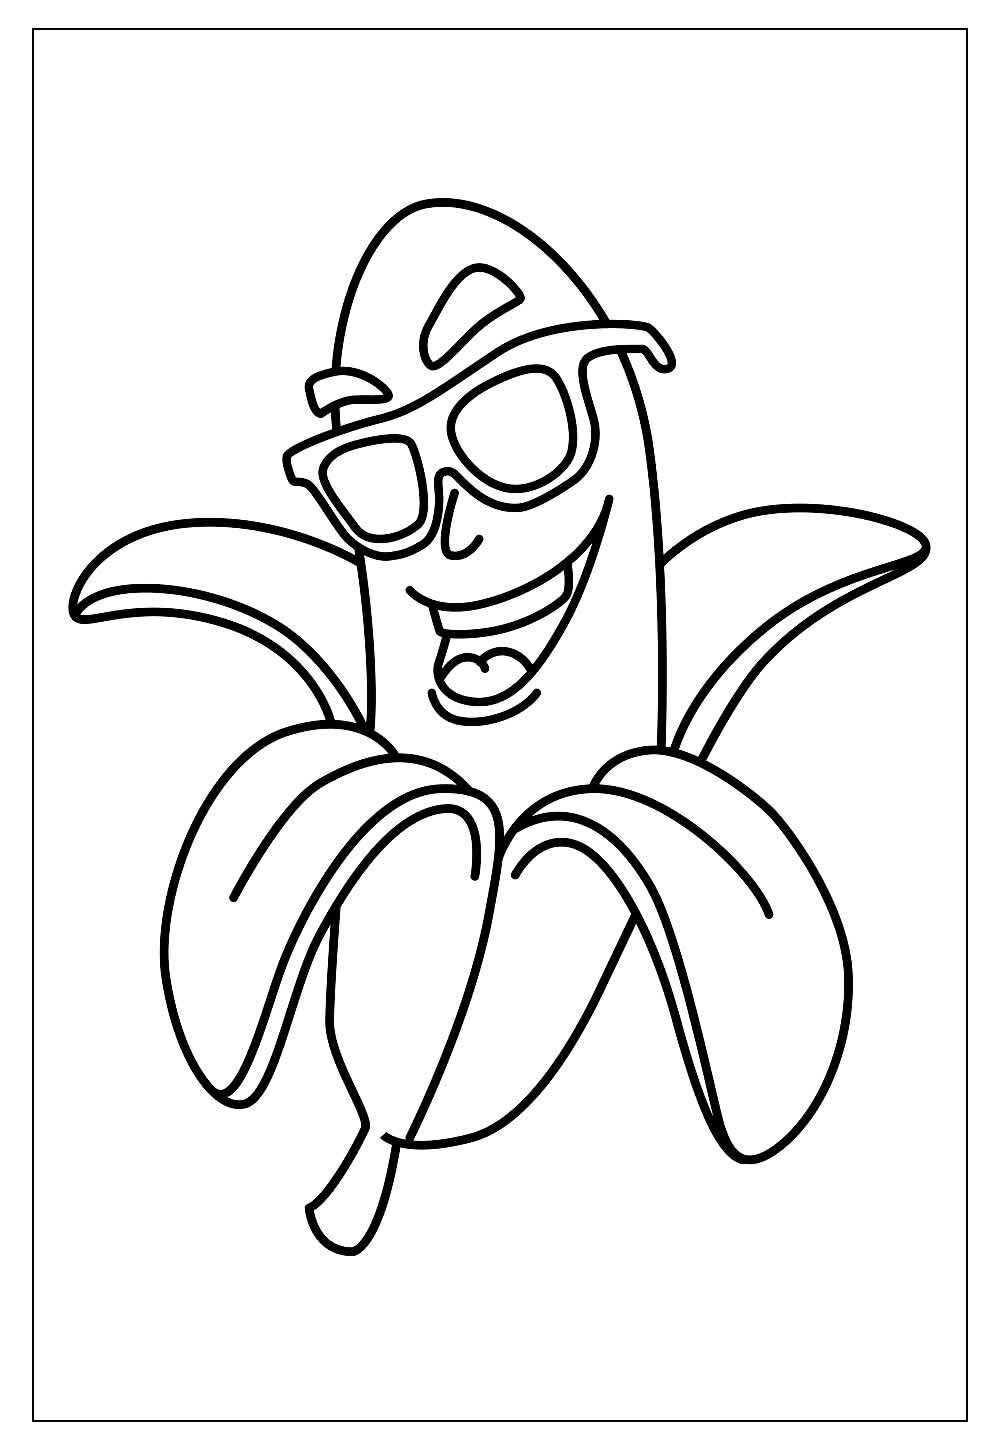 Banana para Colorir: +60 Desenhos Fofos para Imprimir!